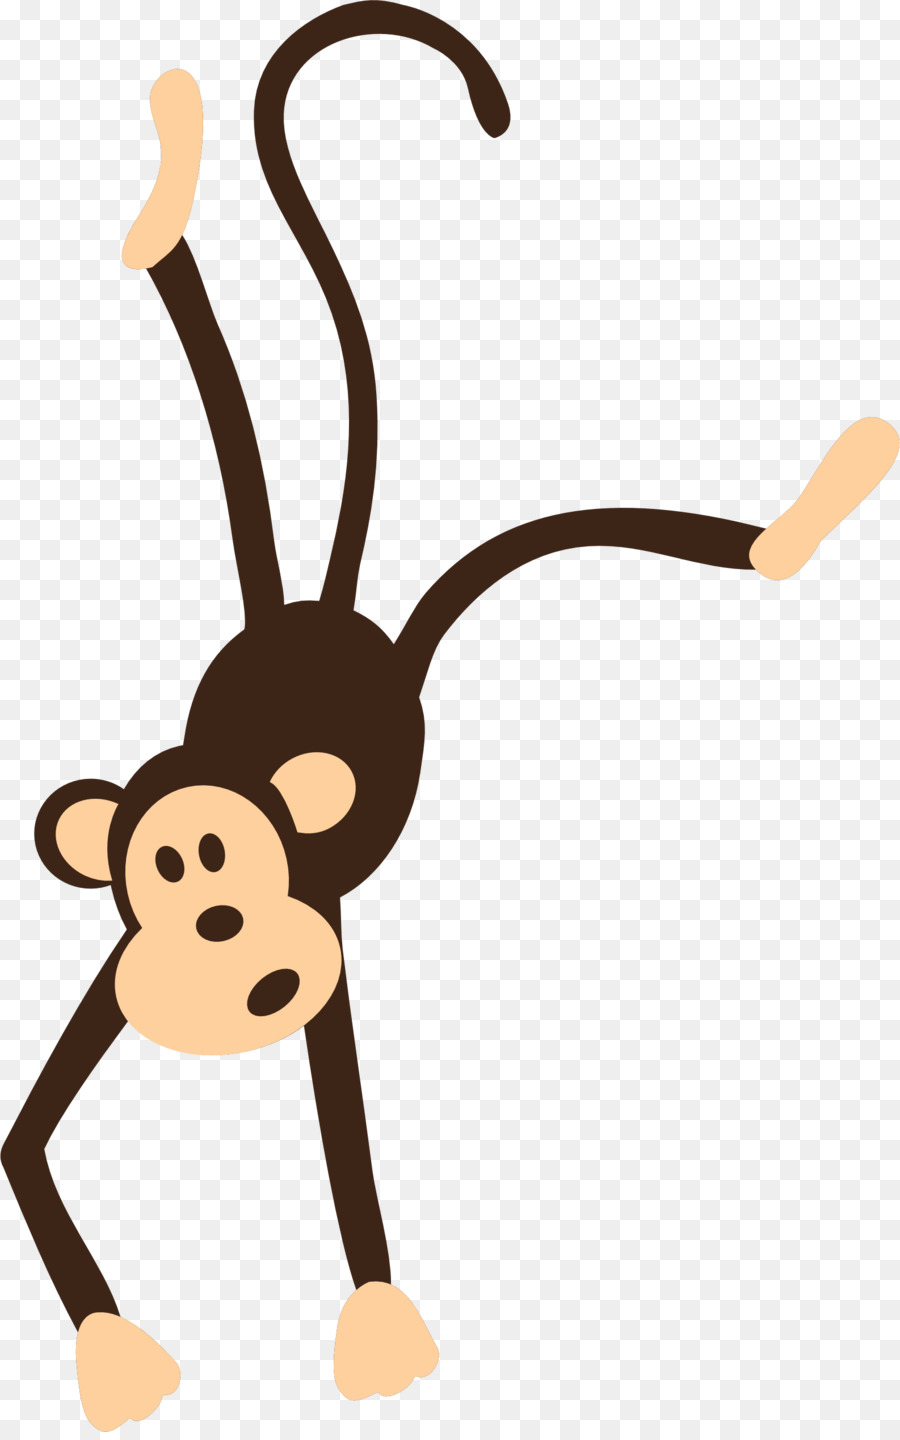 Chimpanzee Mandrill Baby Monkeys Primate - monkey png download - 1586*2524 - Free Transparent Chimpanzee png Download.